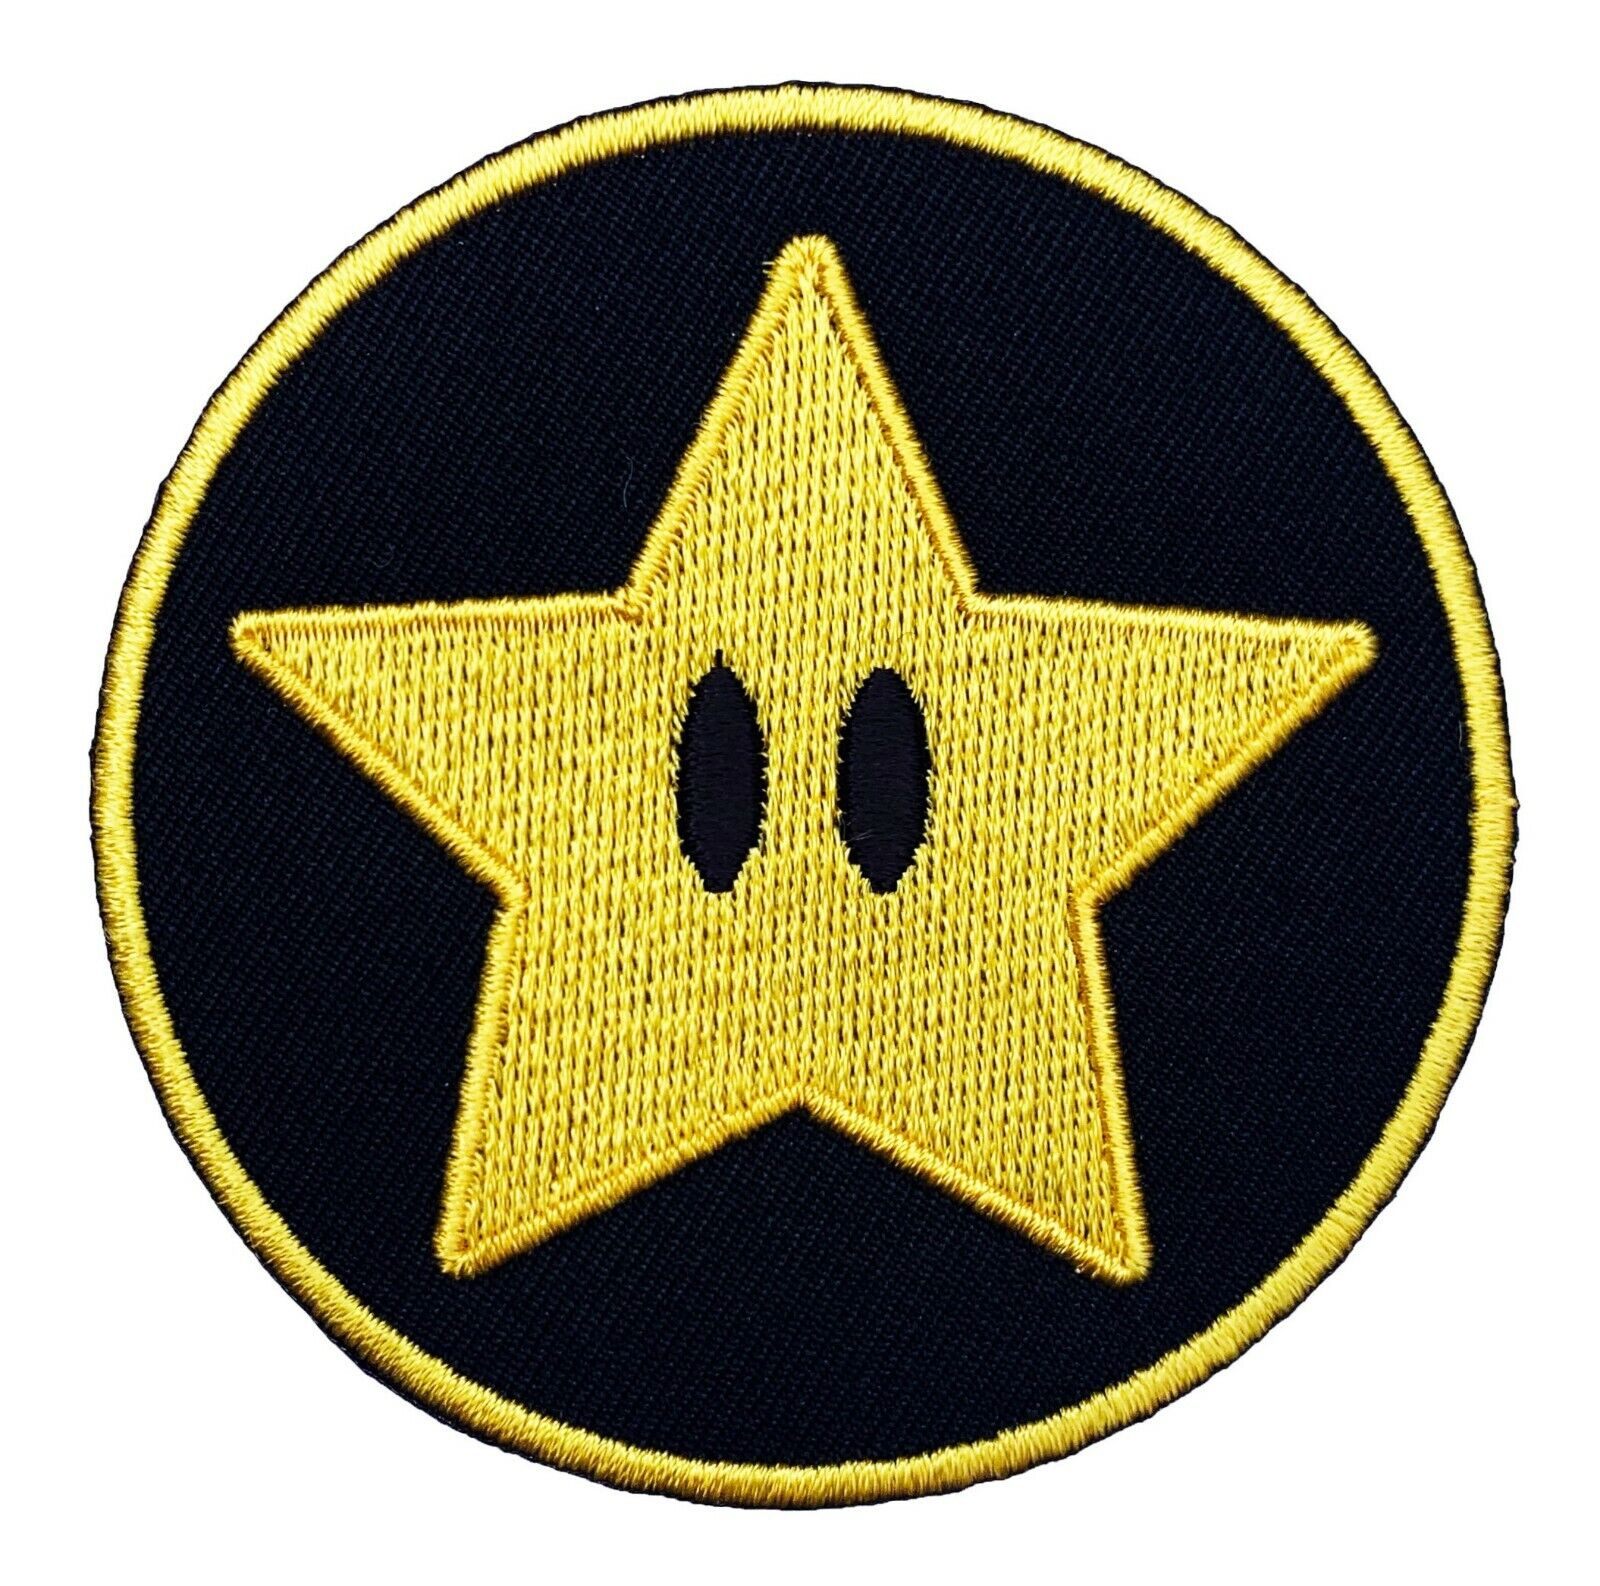 Gold Power Star Patch (3 Inch) Iron on Badge Costume Super Mario World Kart 